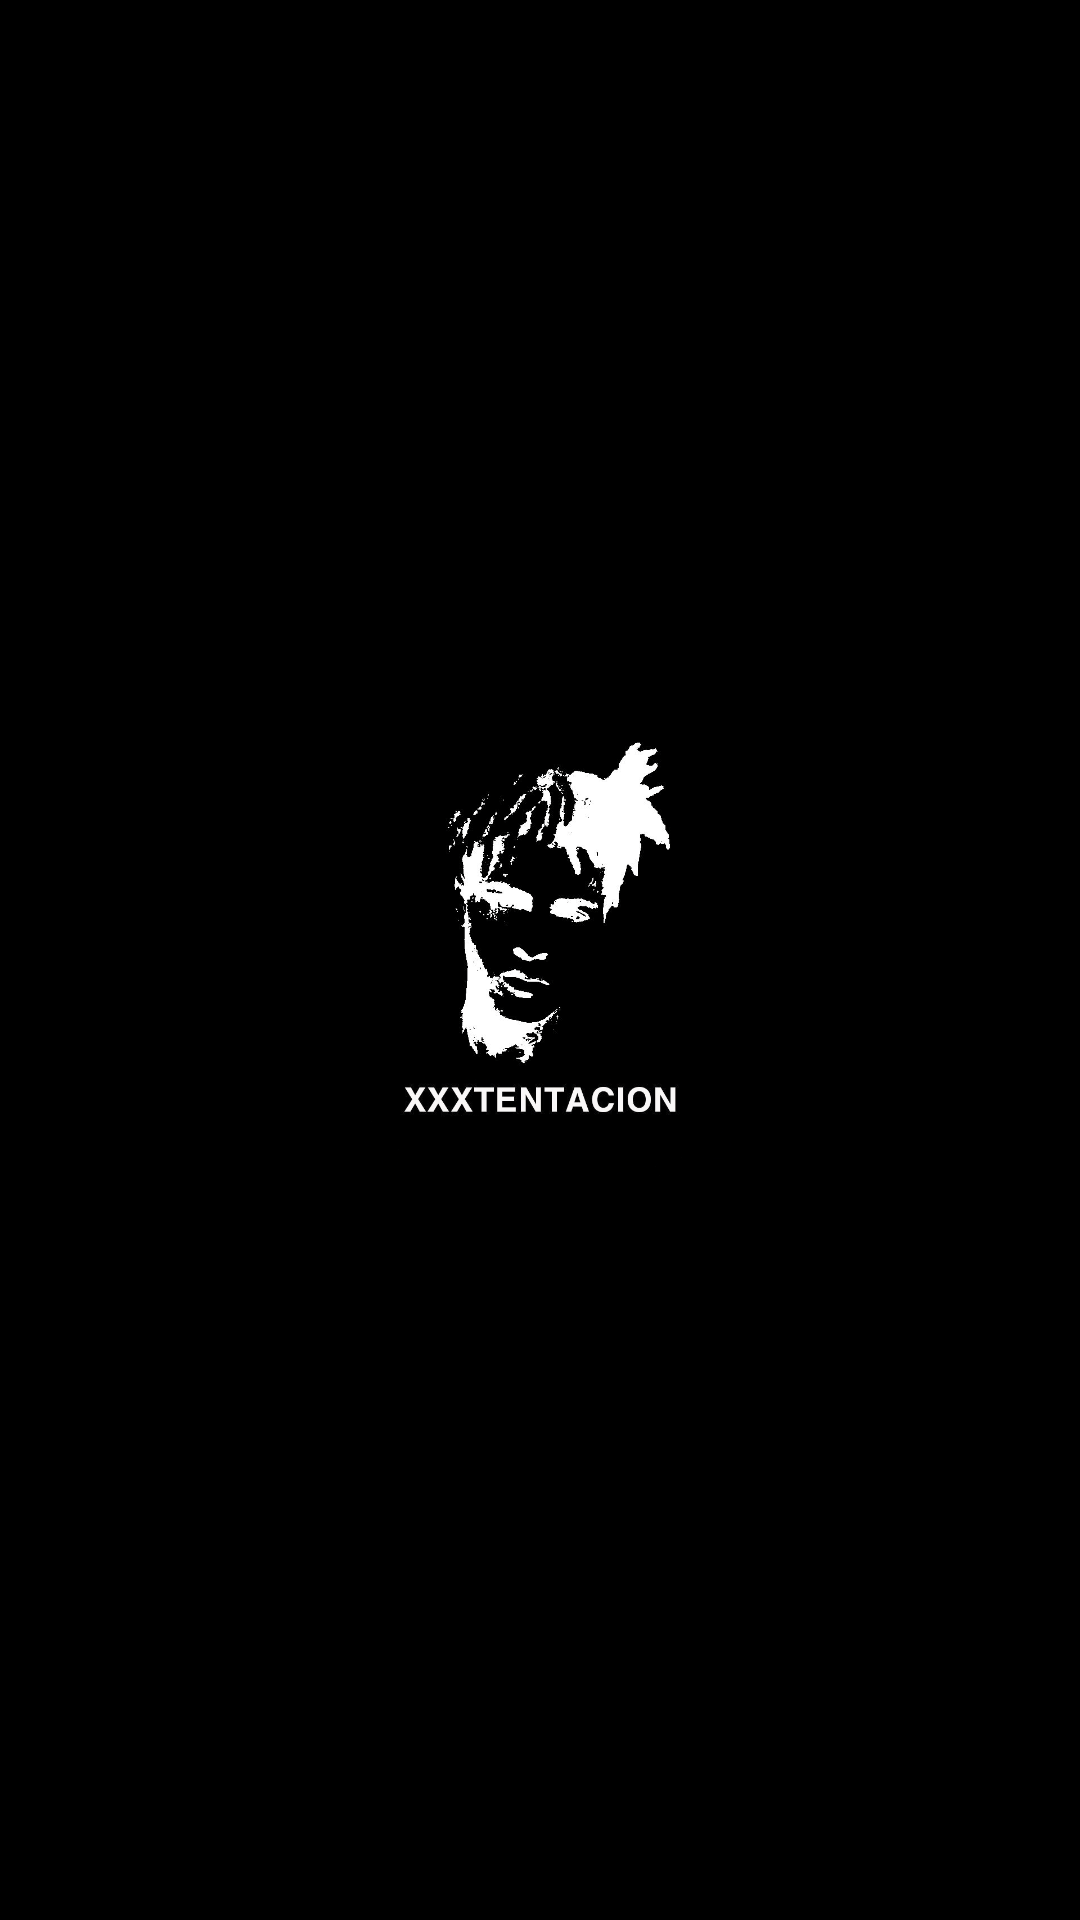 The logo for a company called boxtrolls - XXXTentacion